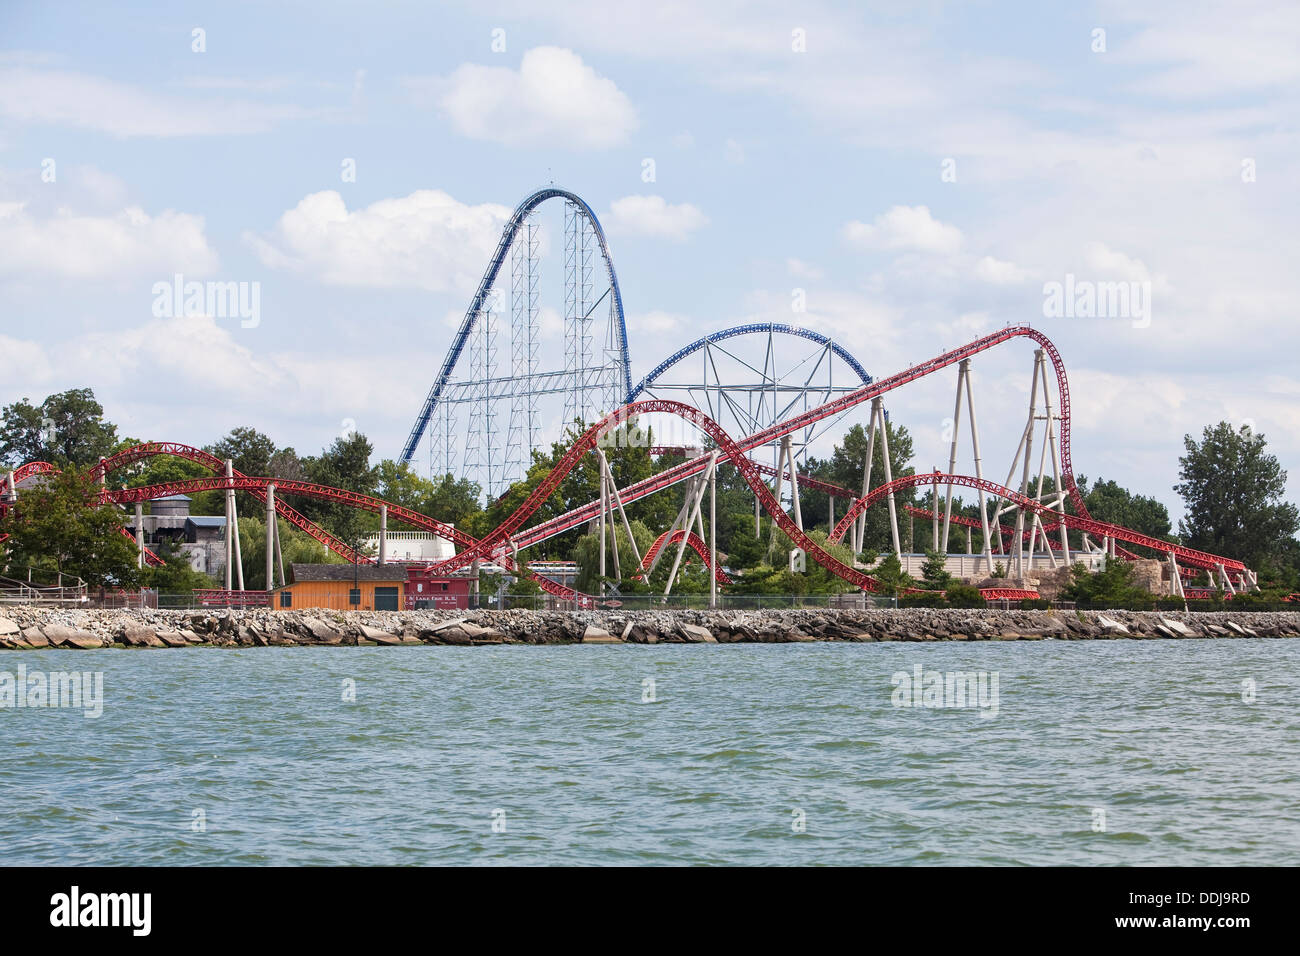 The Maverick roller coaster is pictured in Cedar Point amusement park in Sandusky, Ohio Stock Photo